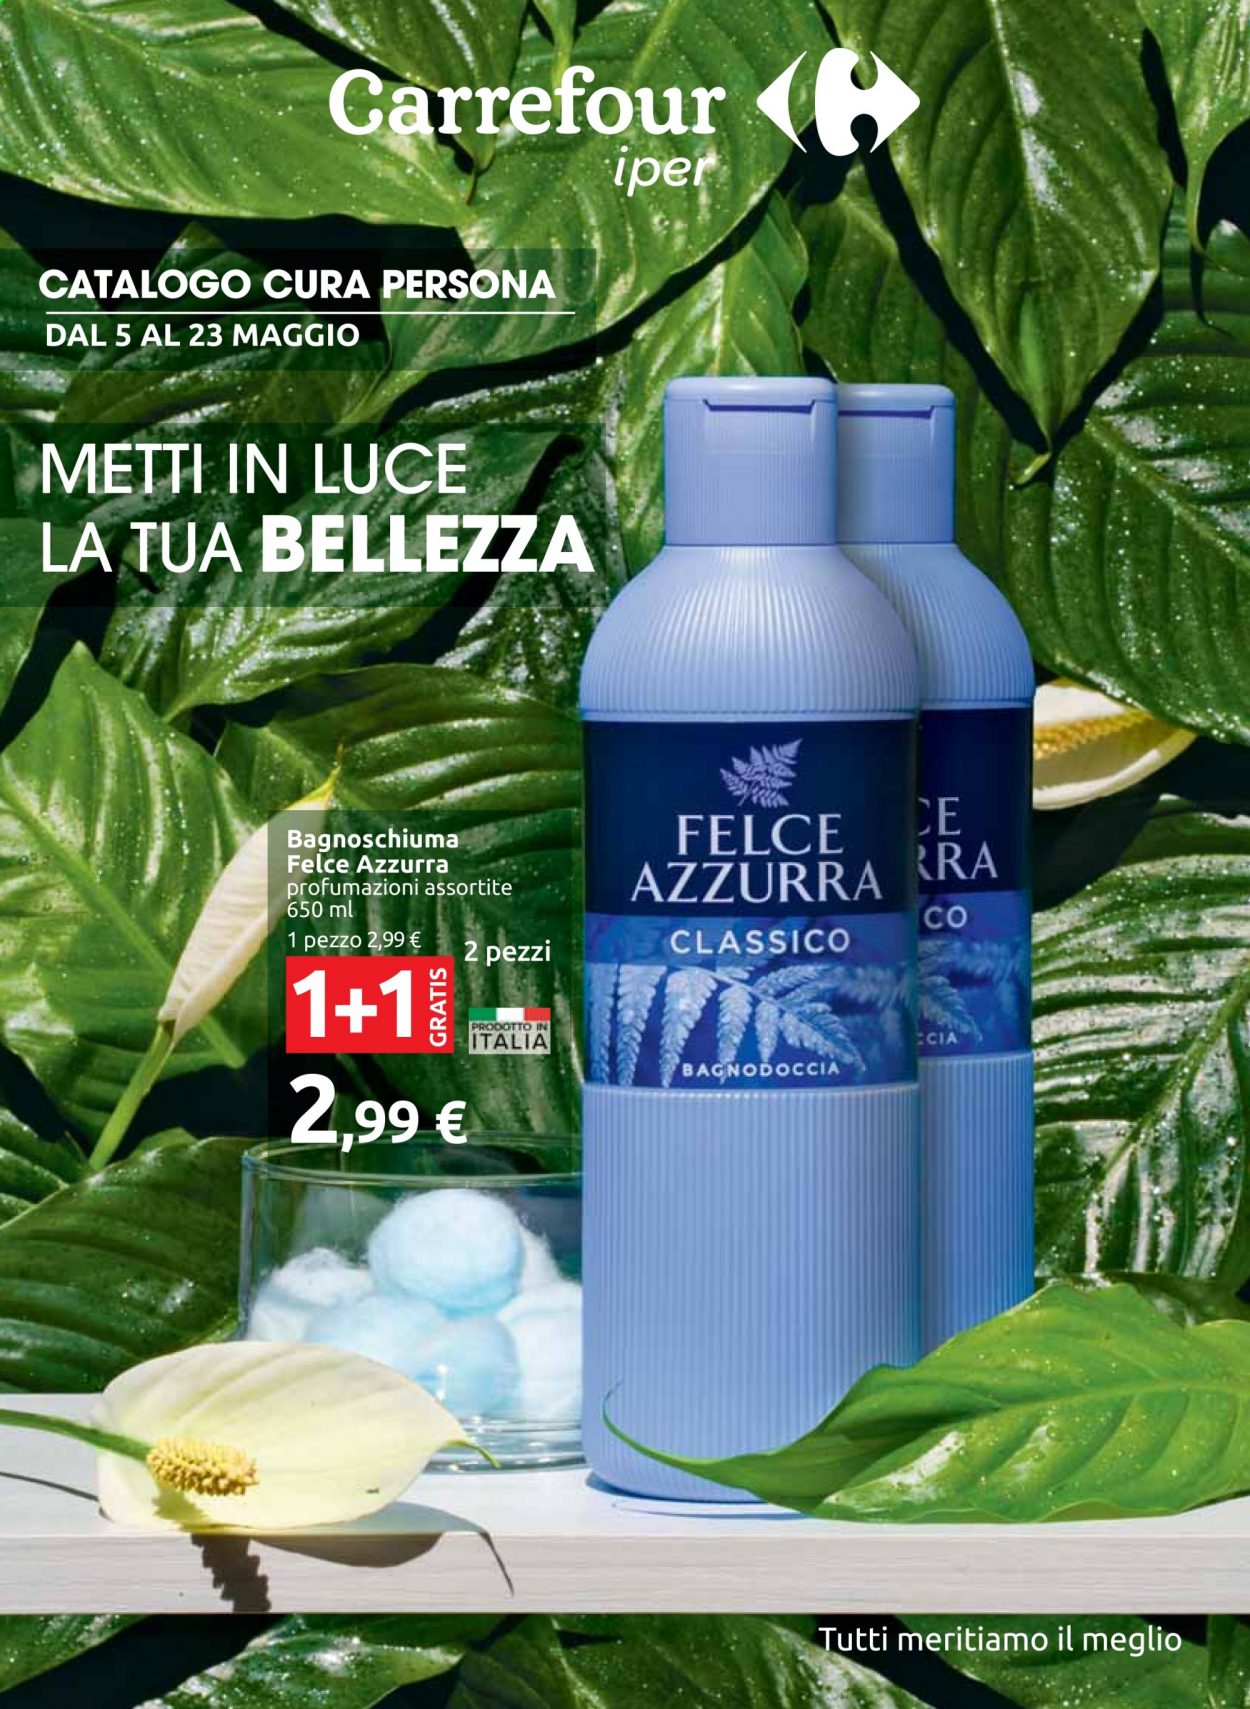 thumbnail - Volantino Carrefour - 5/5/2021 - 23/5/2021 - Prodotti in offerta - Felce Azzurra, gel doccia, bagnoschiuma, luce. Pagina 1.